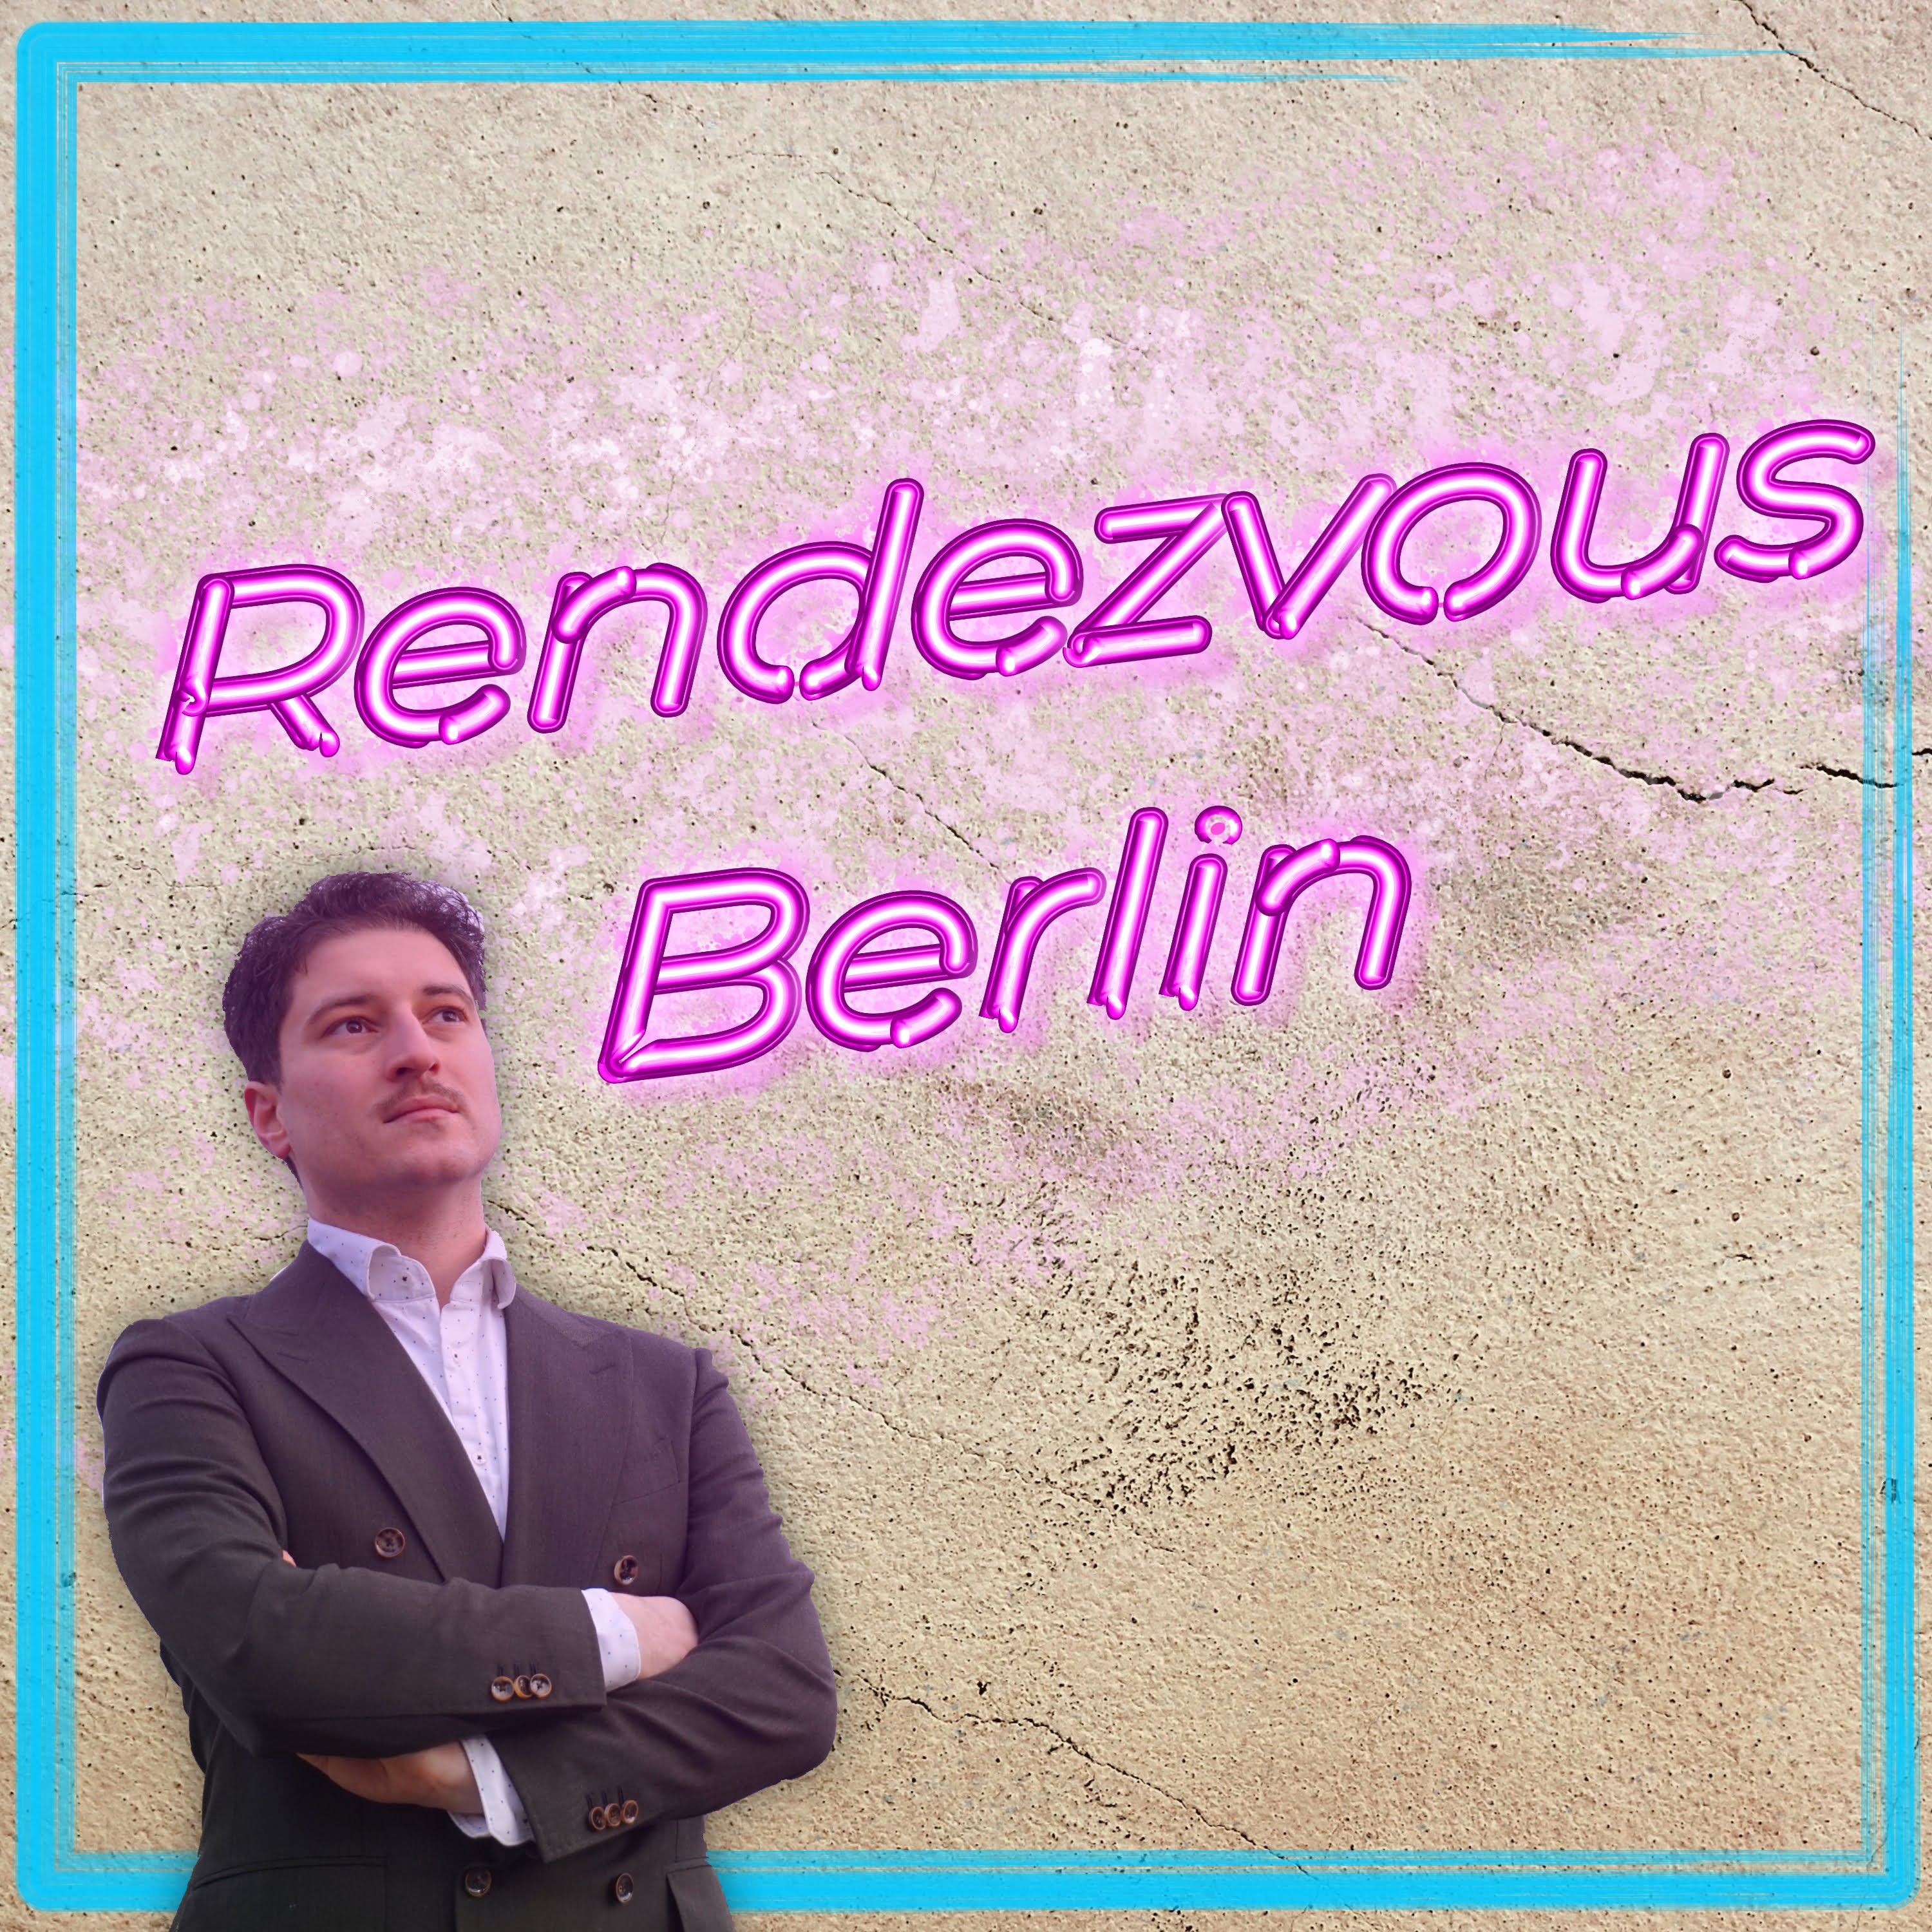 Podcastcover zum Podcast Rendezvous Berlin von Patrick Pehl